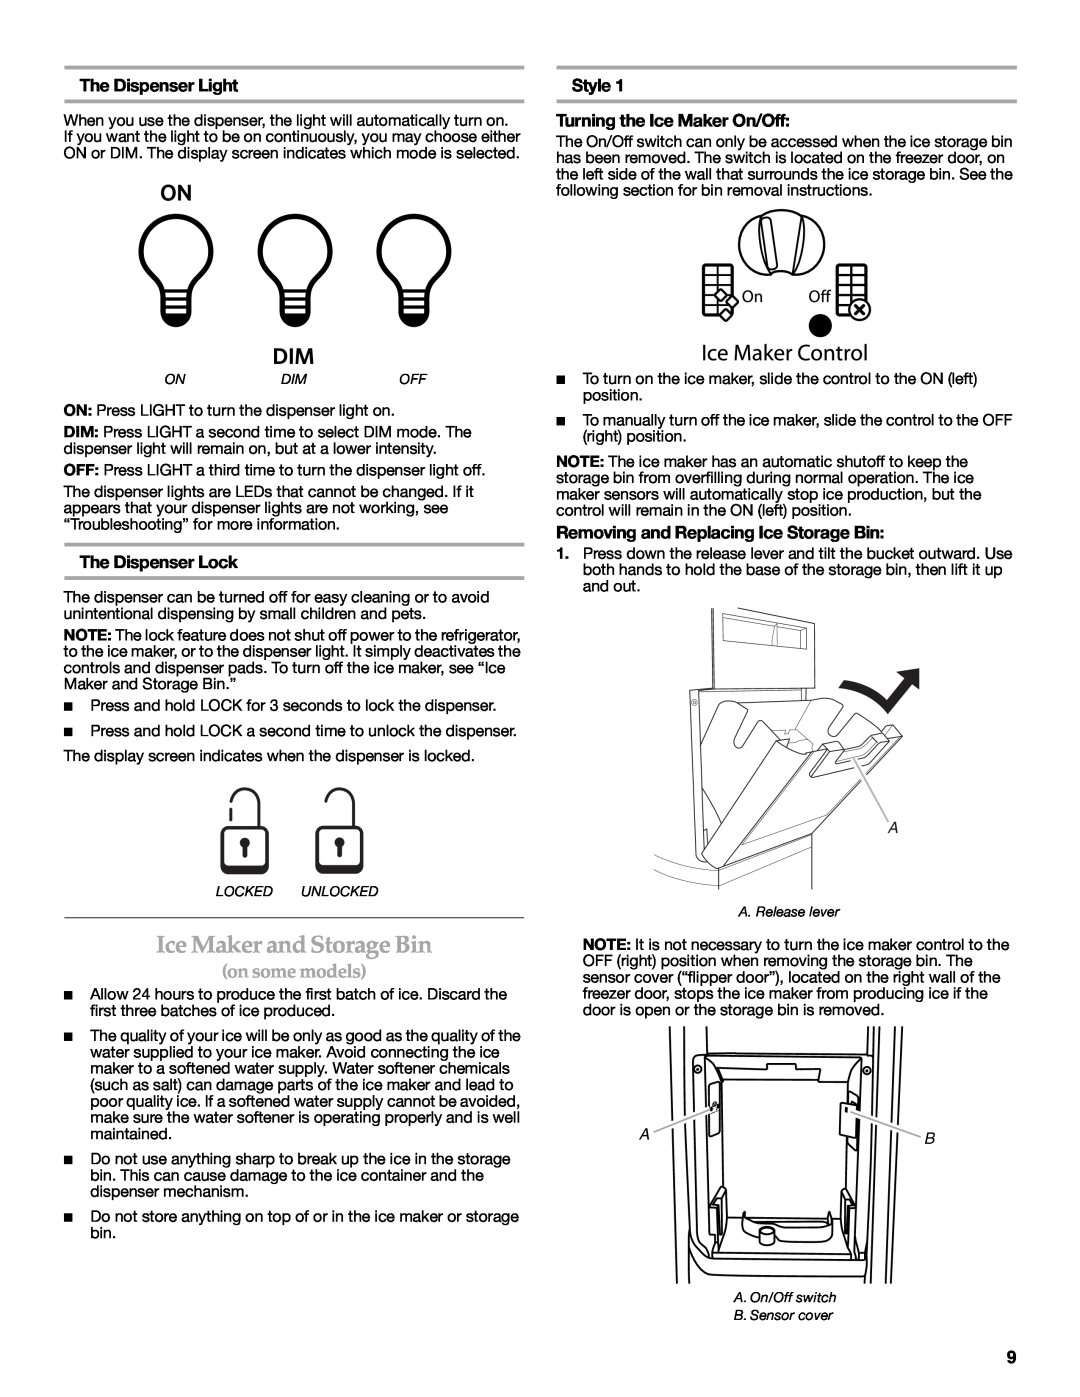 KitchenAid W10416762B warranty Ice Maker and Storage Bin, The Dispenser Light, The Dispenser Lock, on some models 